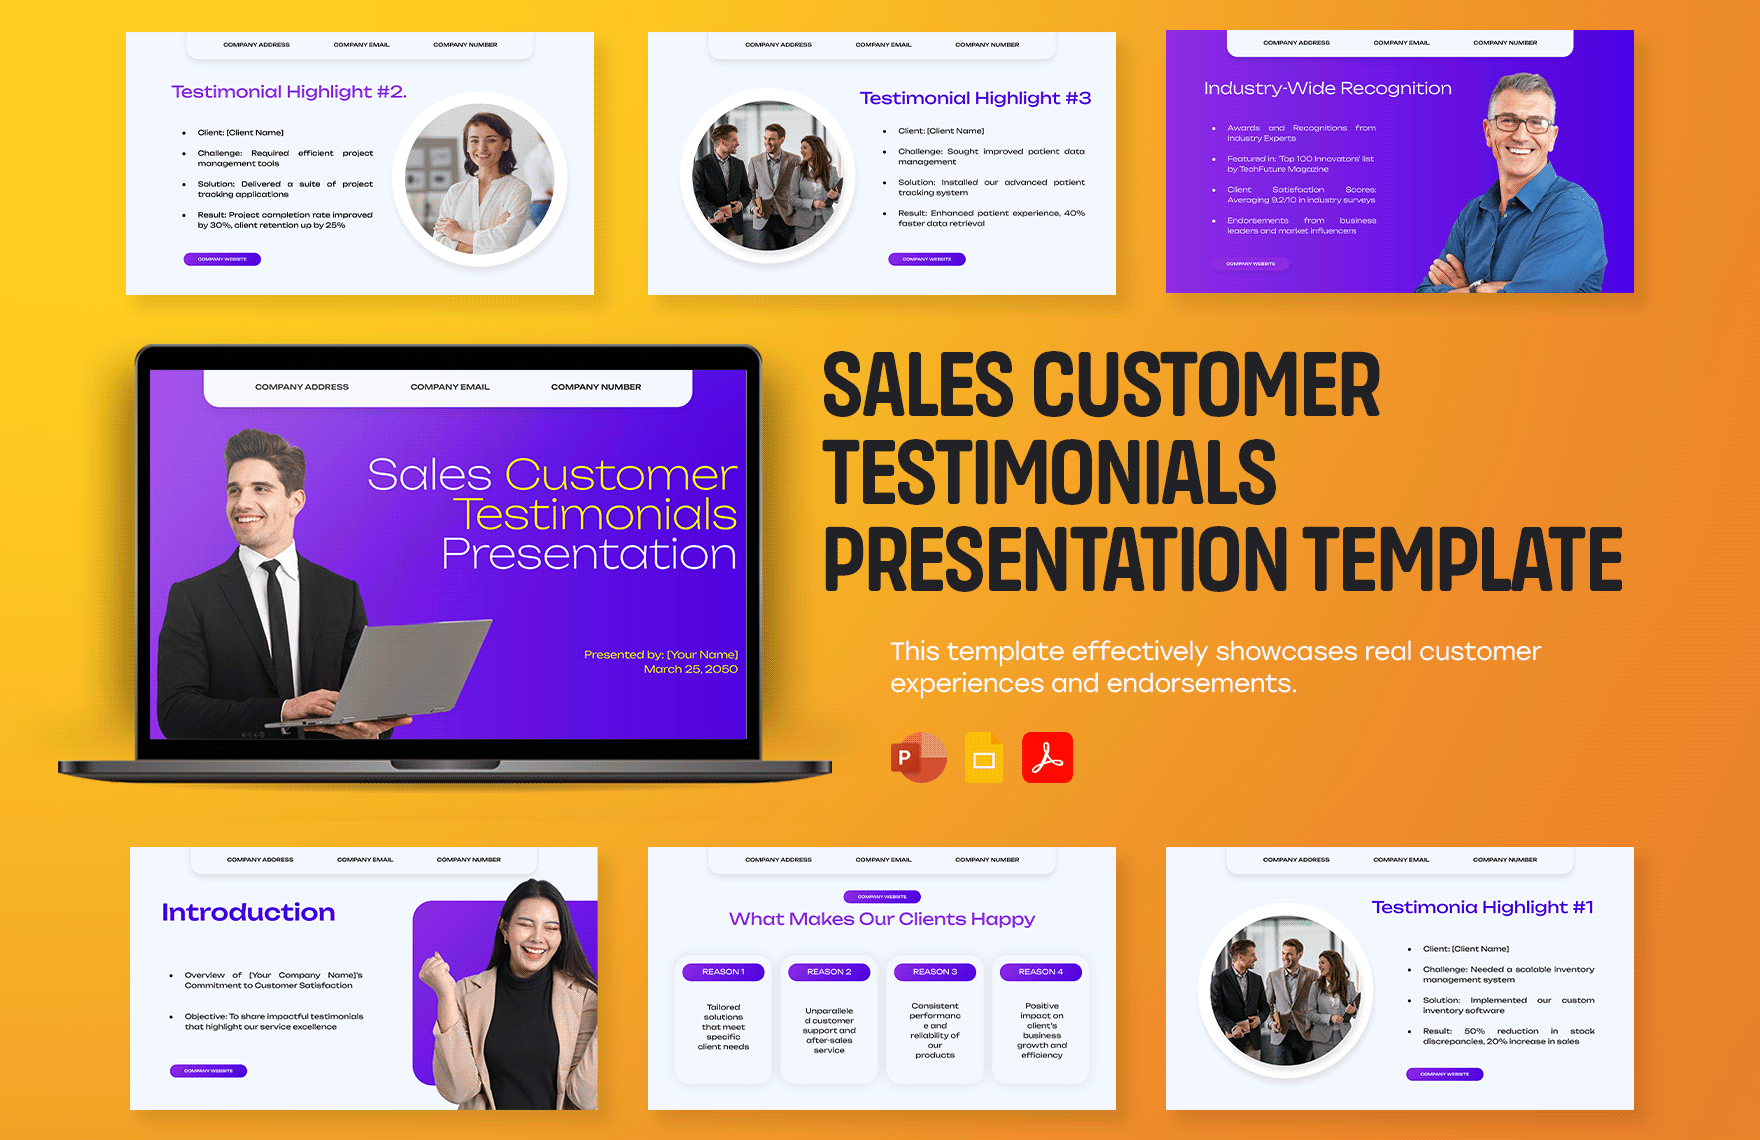 Sales Customer Testimonials Presentation Template in PDF, PowerPoint, Google Slides